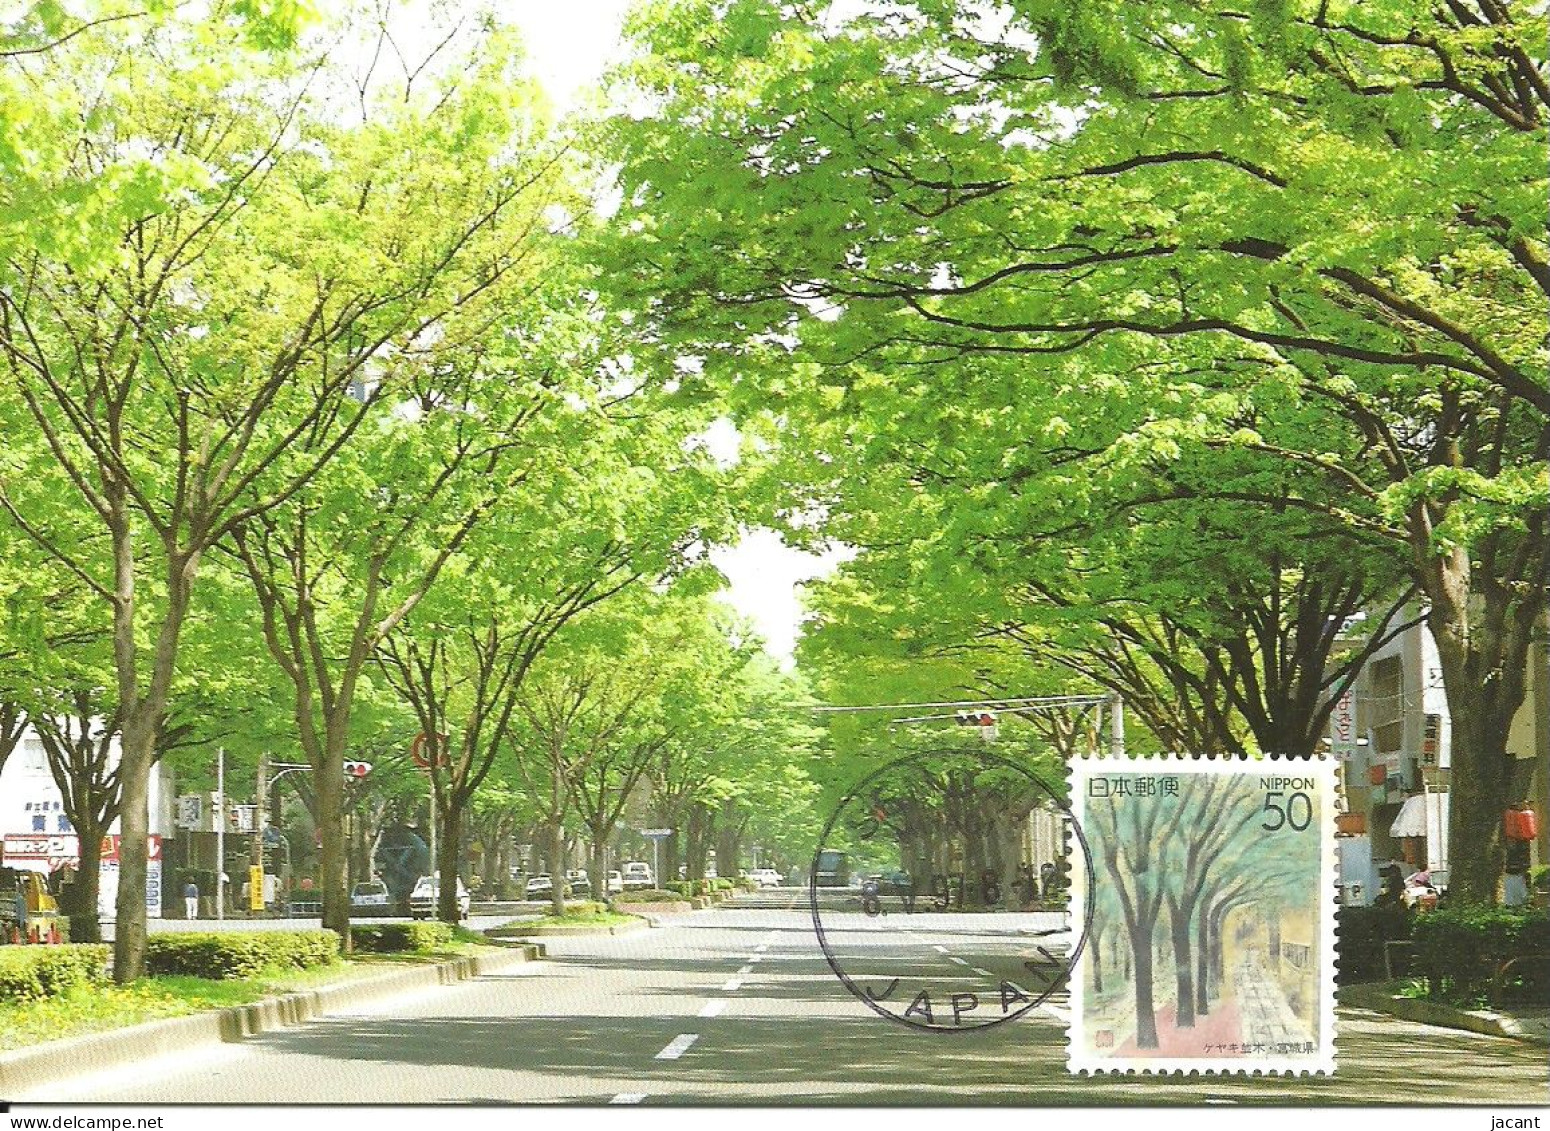 Carte Maximum - Japan - Arbres - Trees In Street - Sendai - Cartes-maximum